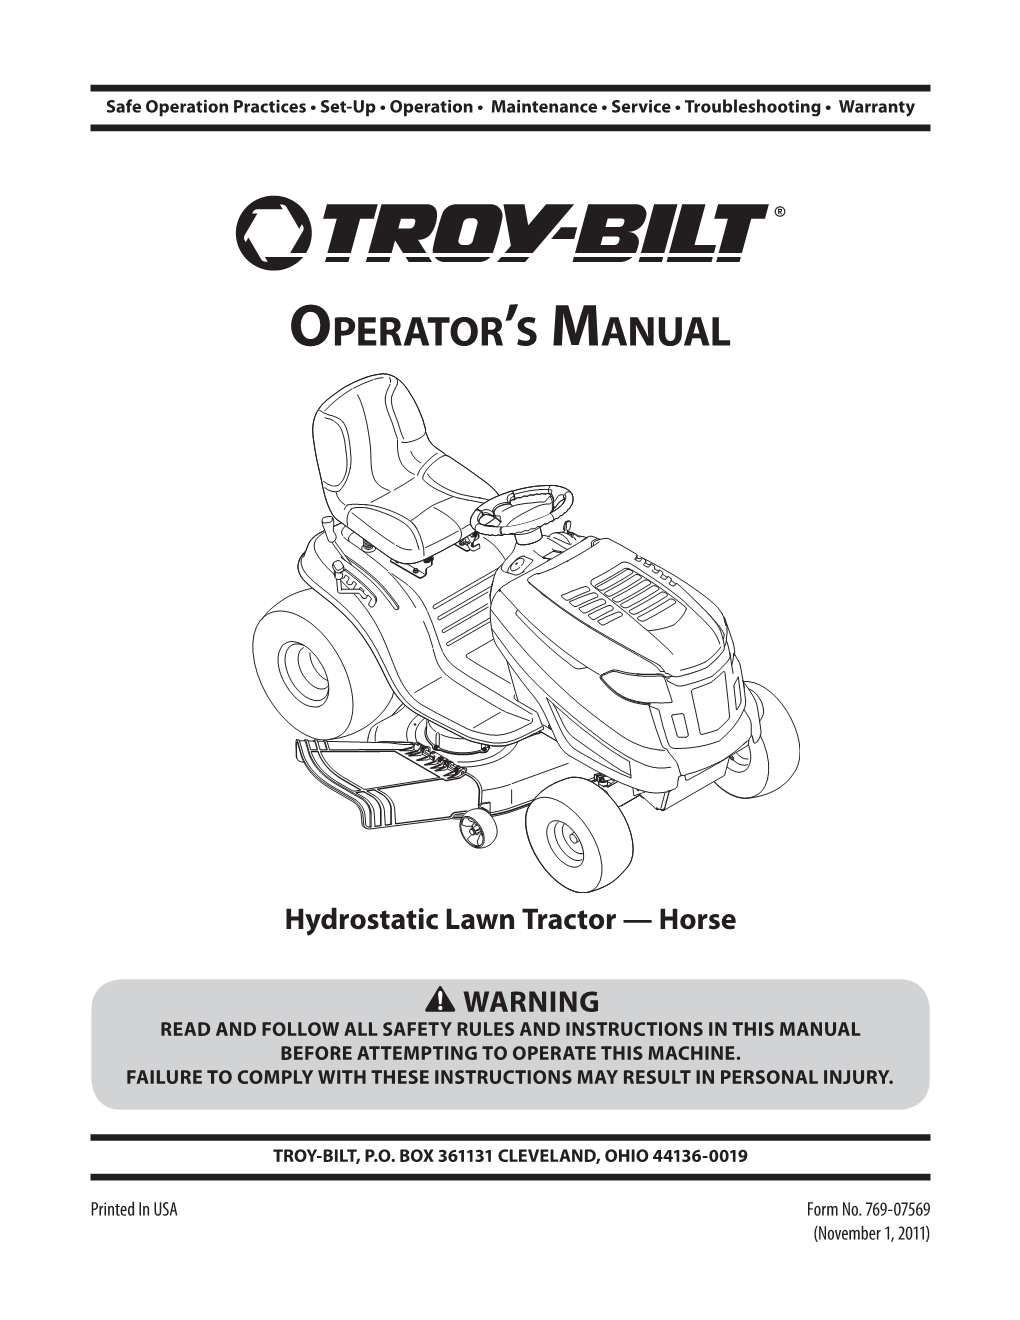 Operatorts Manual